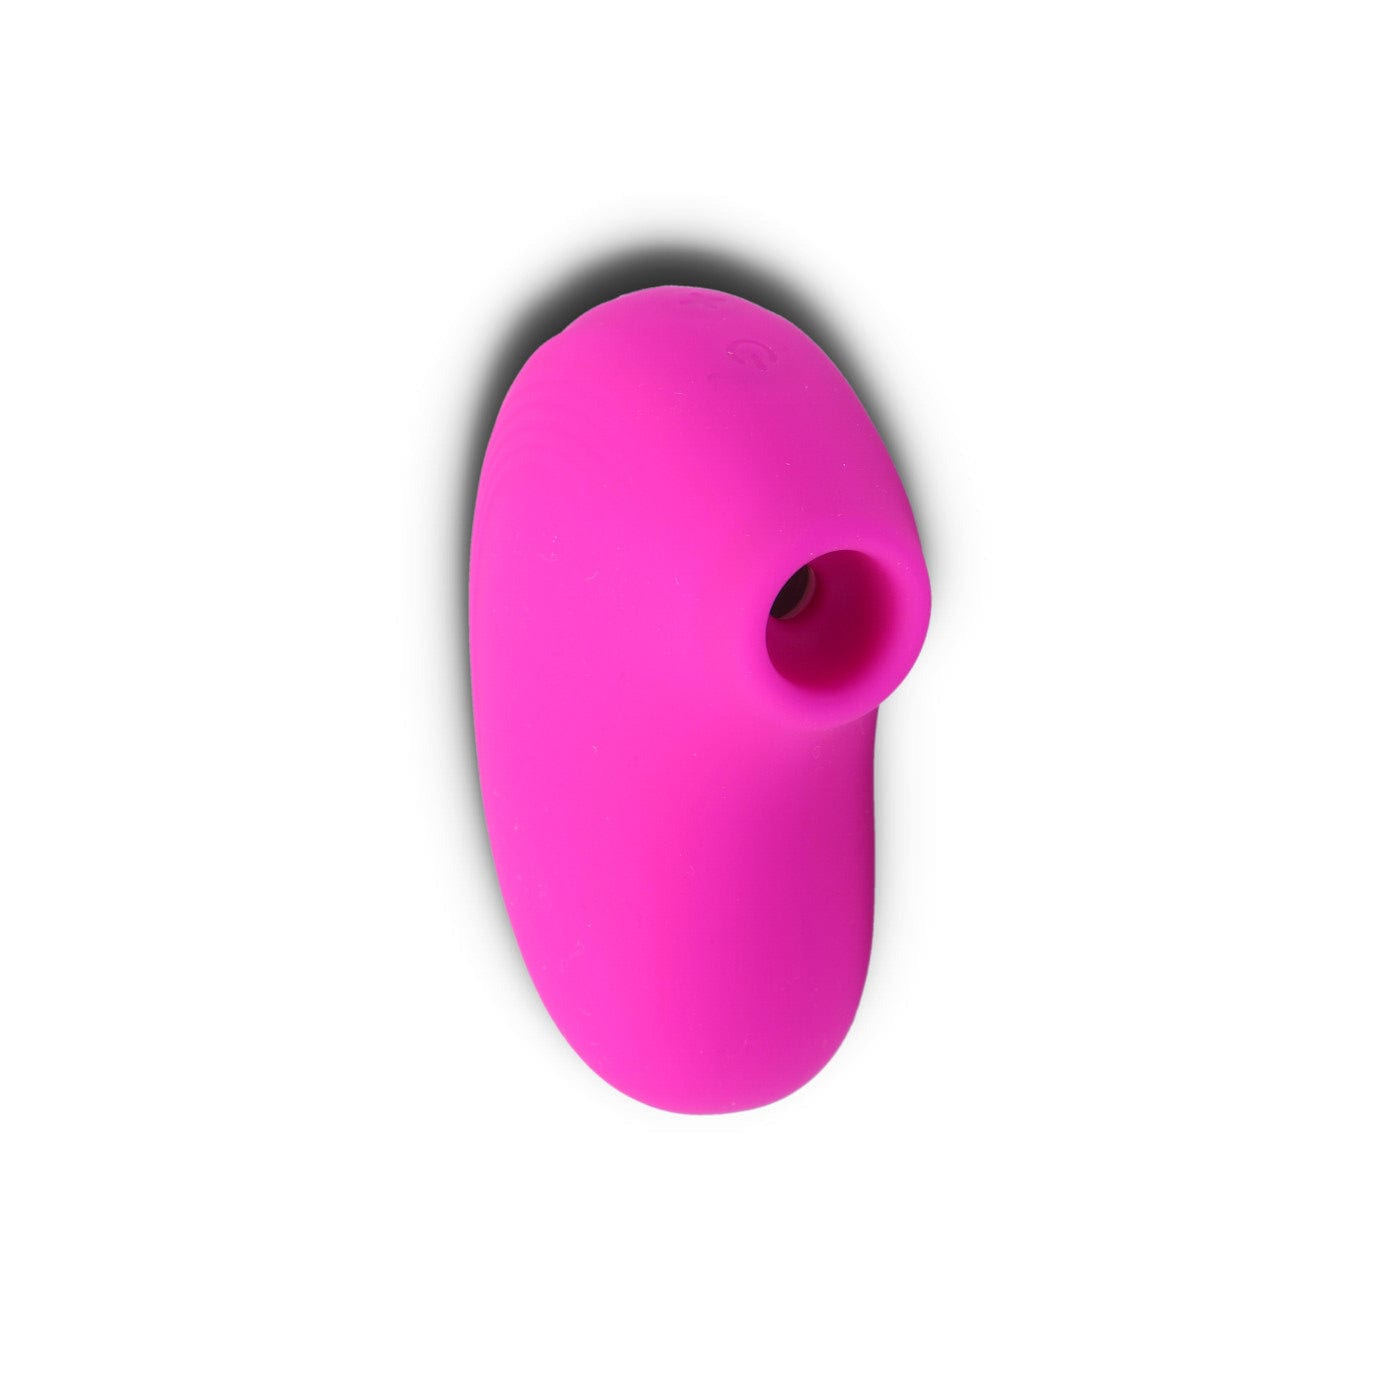 Handy fra peech - lille klitoris vakuum stimulator